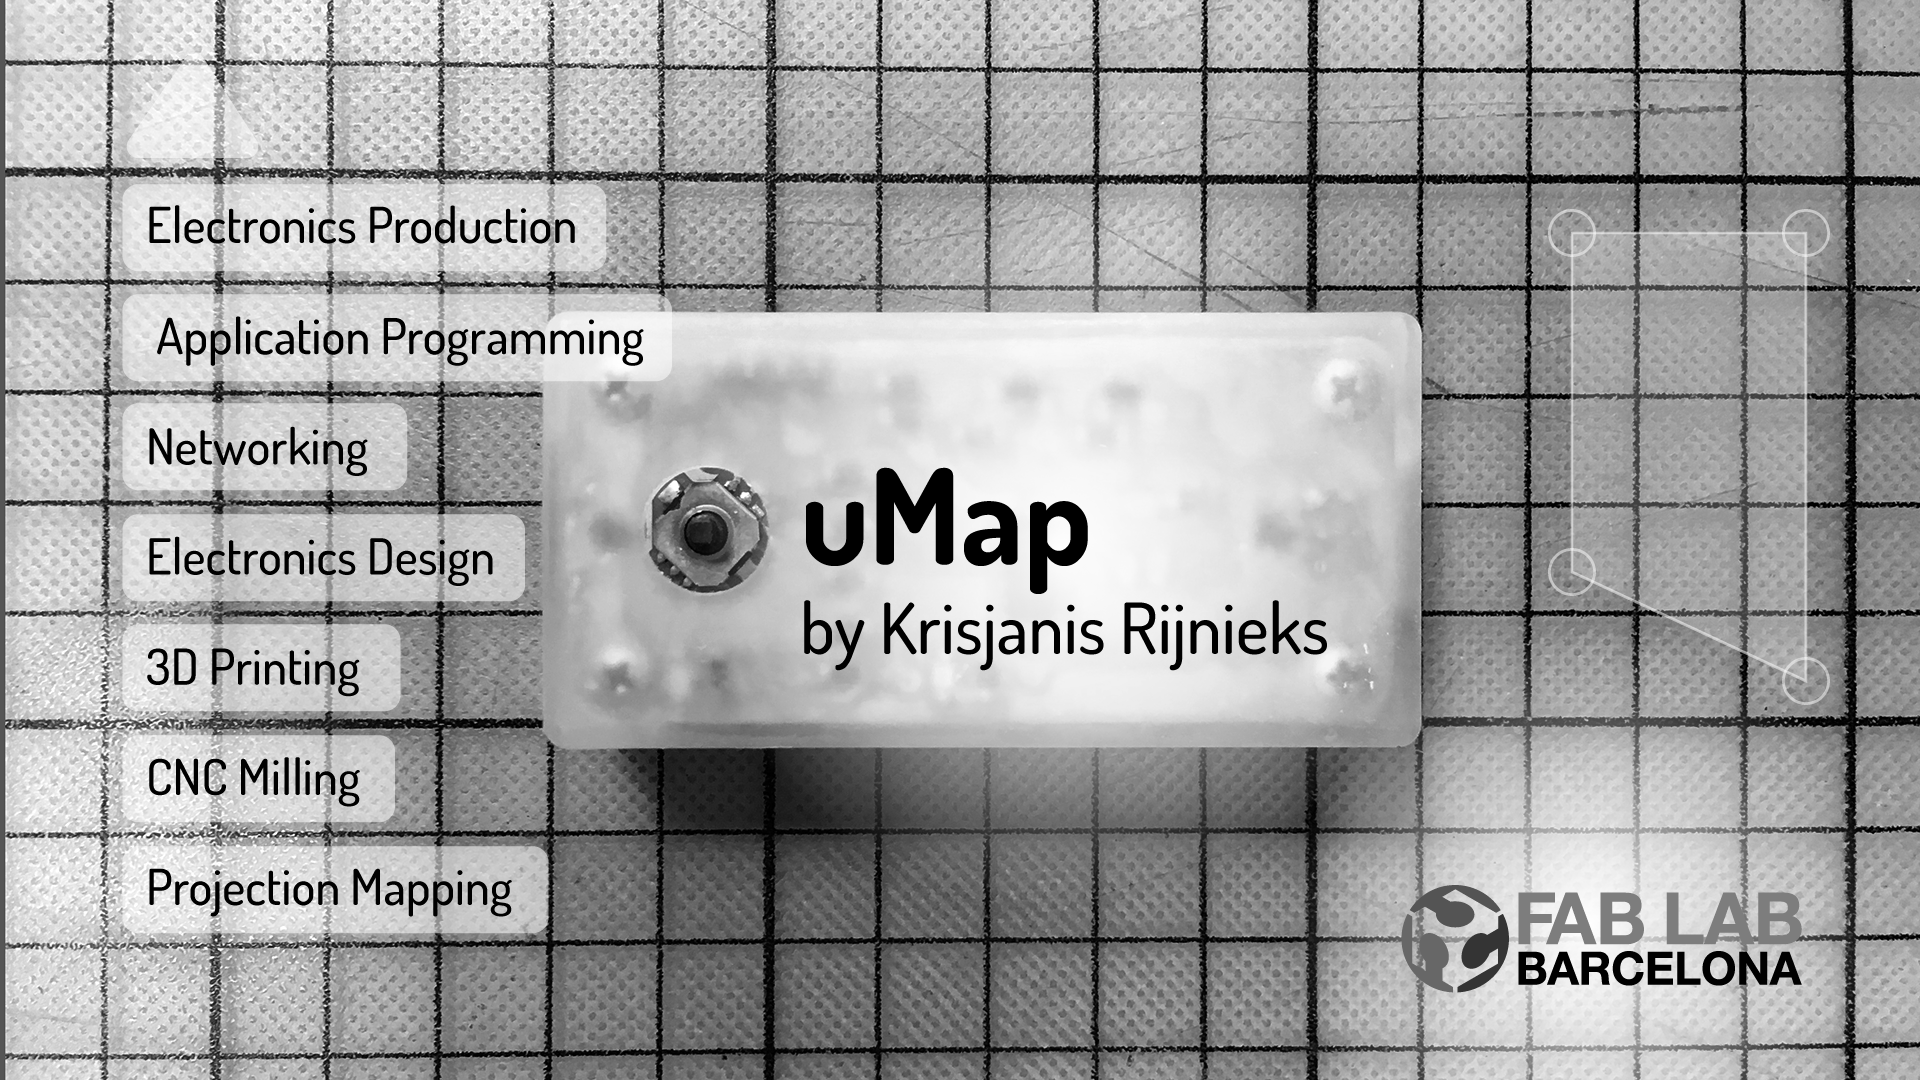 uMap, by Krisjanis Rijnieks